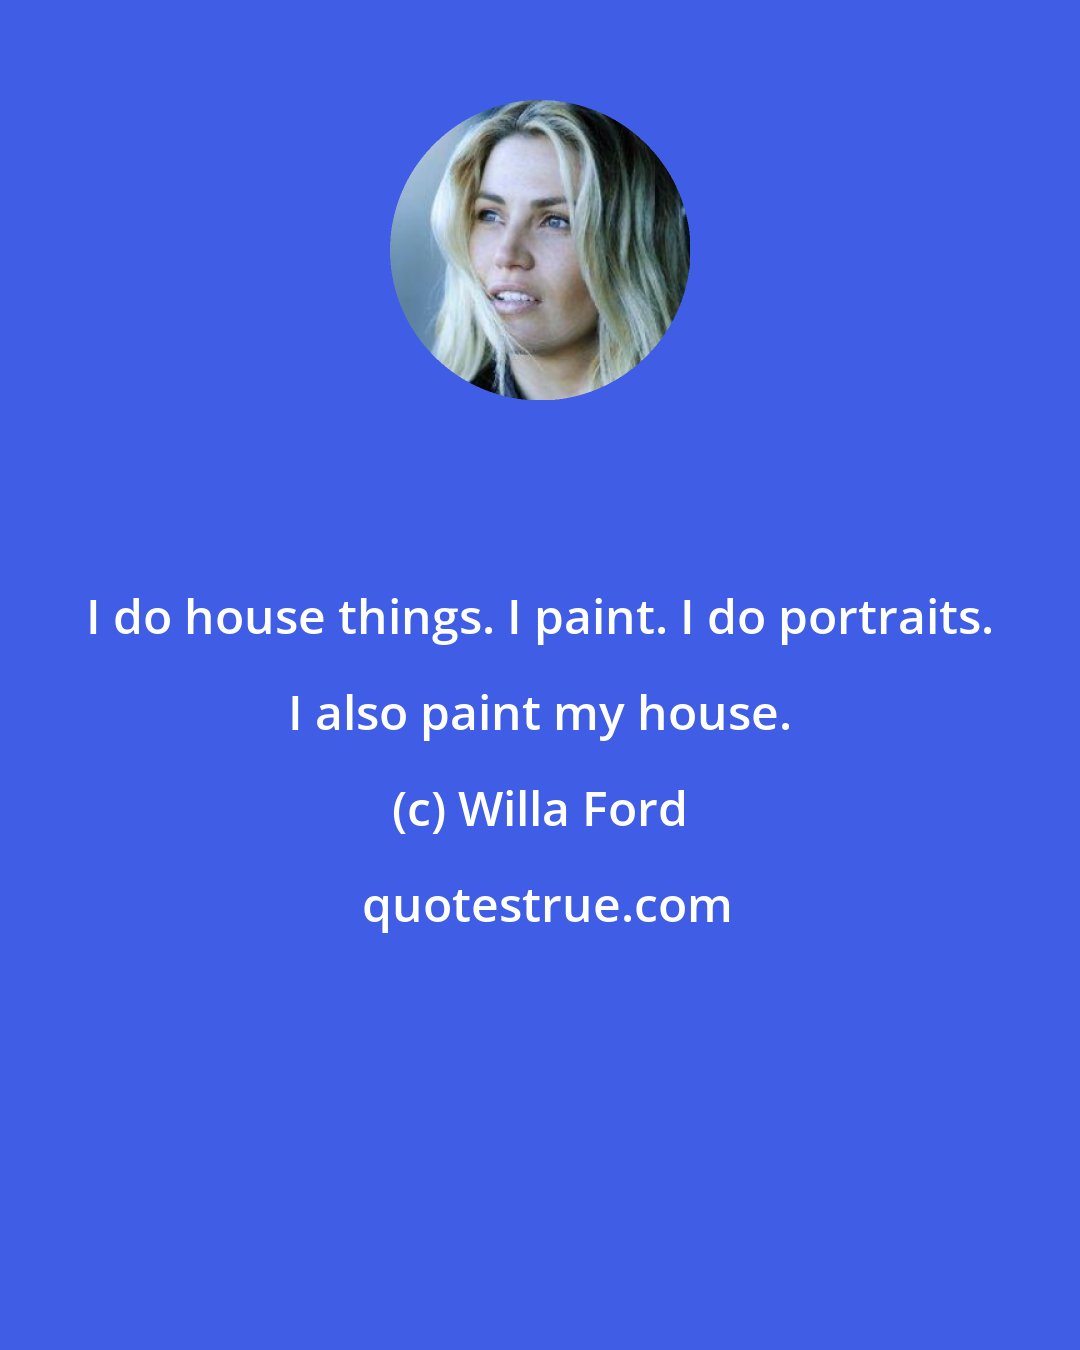 Willa Ford: I do house things. I paint. I do portraits. I also paint my house.